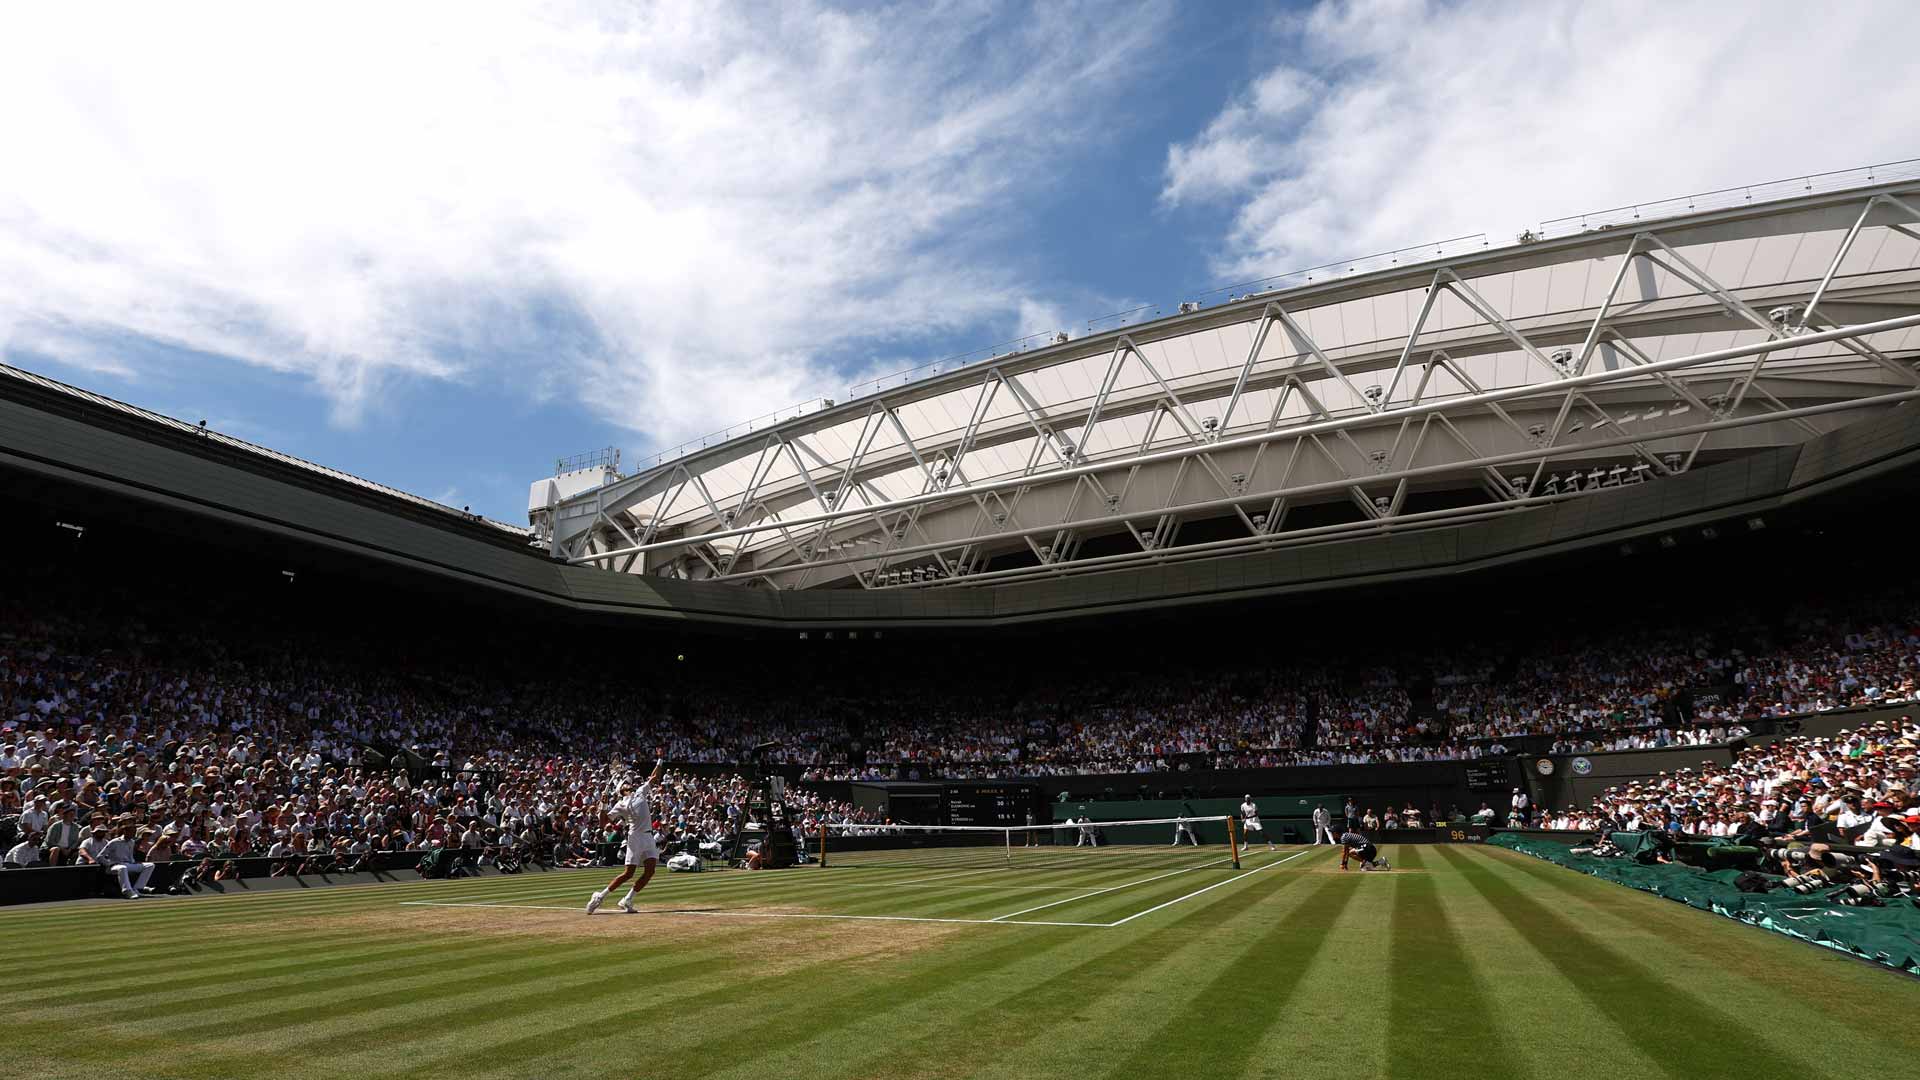 Wimbledon will be held 3-16 July.